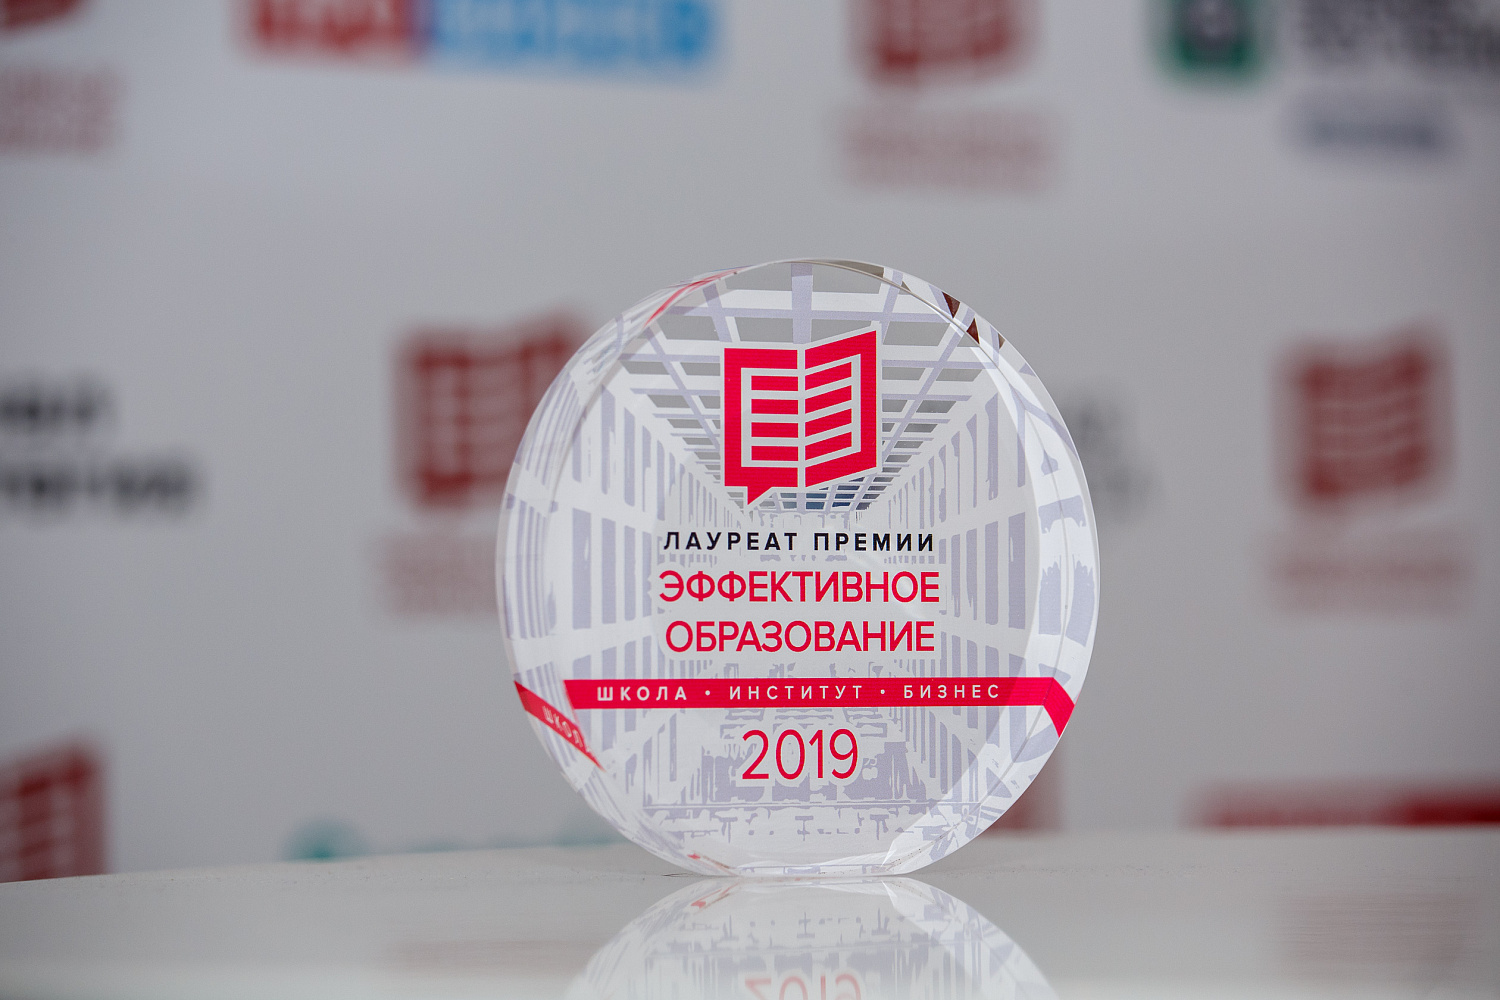 The British International School is recognized as the best international private school in Russia for children in 2019! 